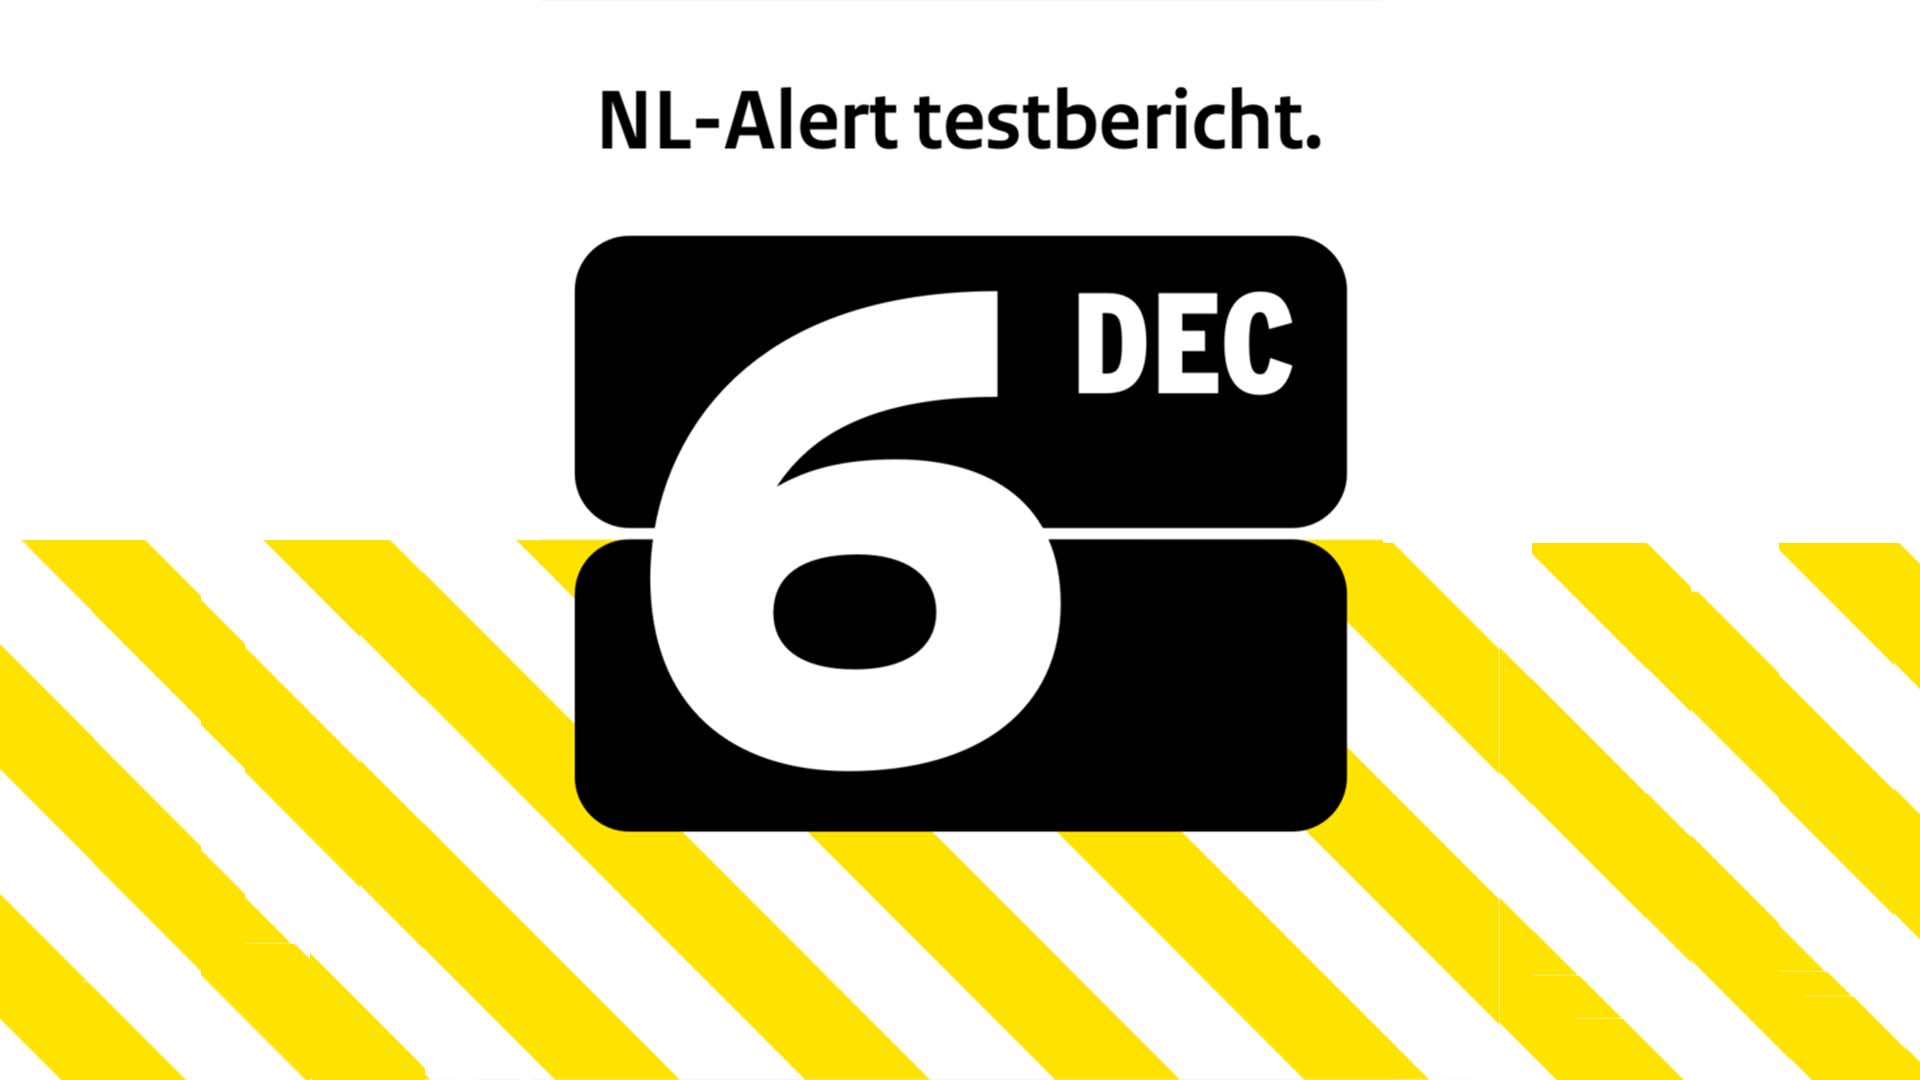 NL-alert testbericht 6 december-1